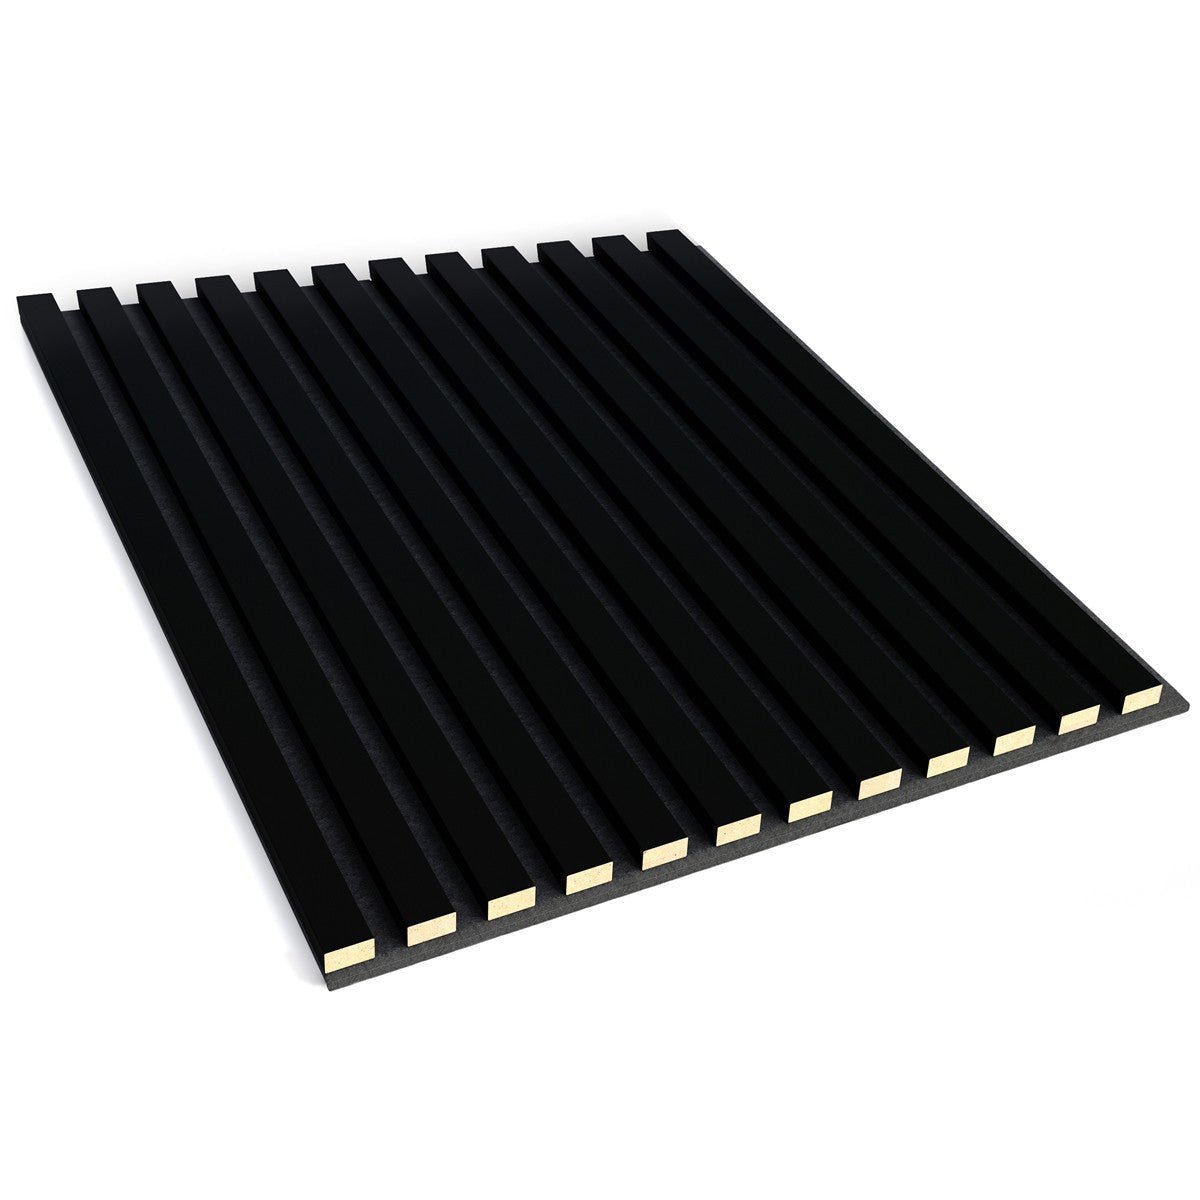 Acoustic Slats panel square - BLACK - Slats acoustic 3D Panels | DecorMania